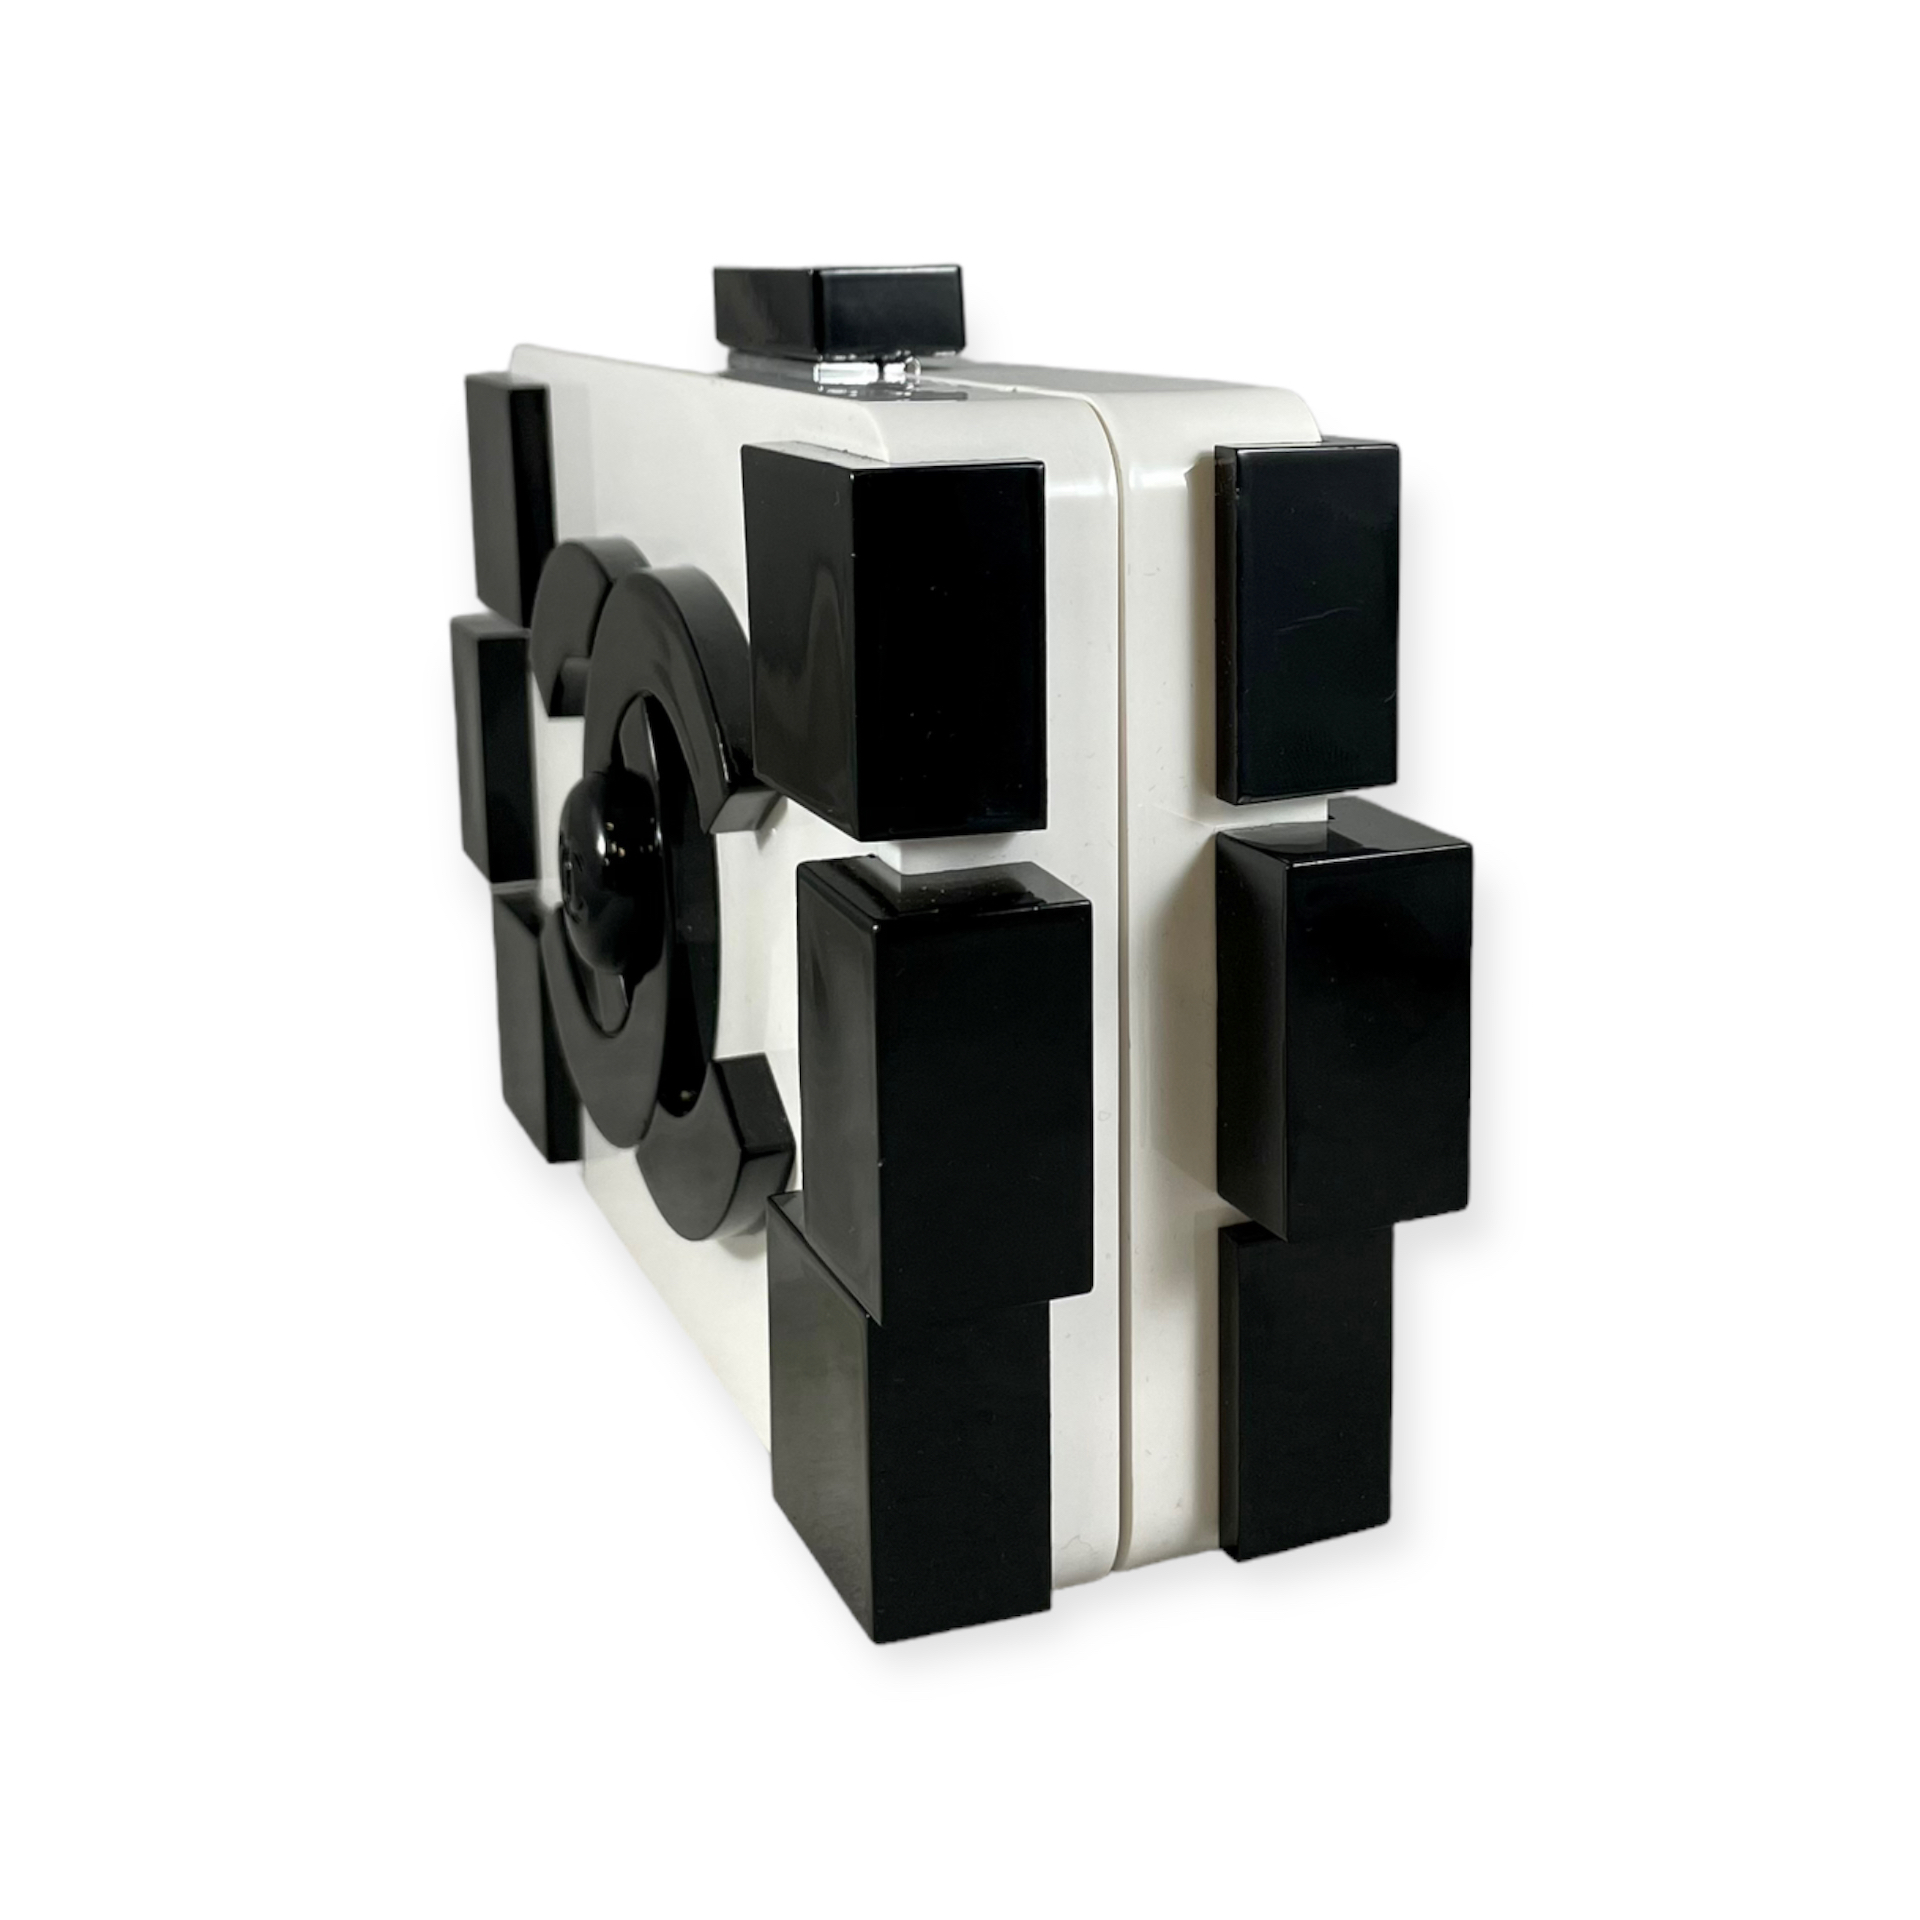 Chanel Lego Clutch in White / Black